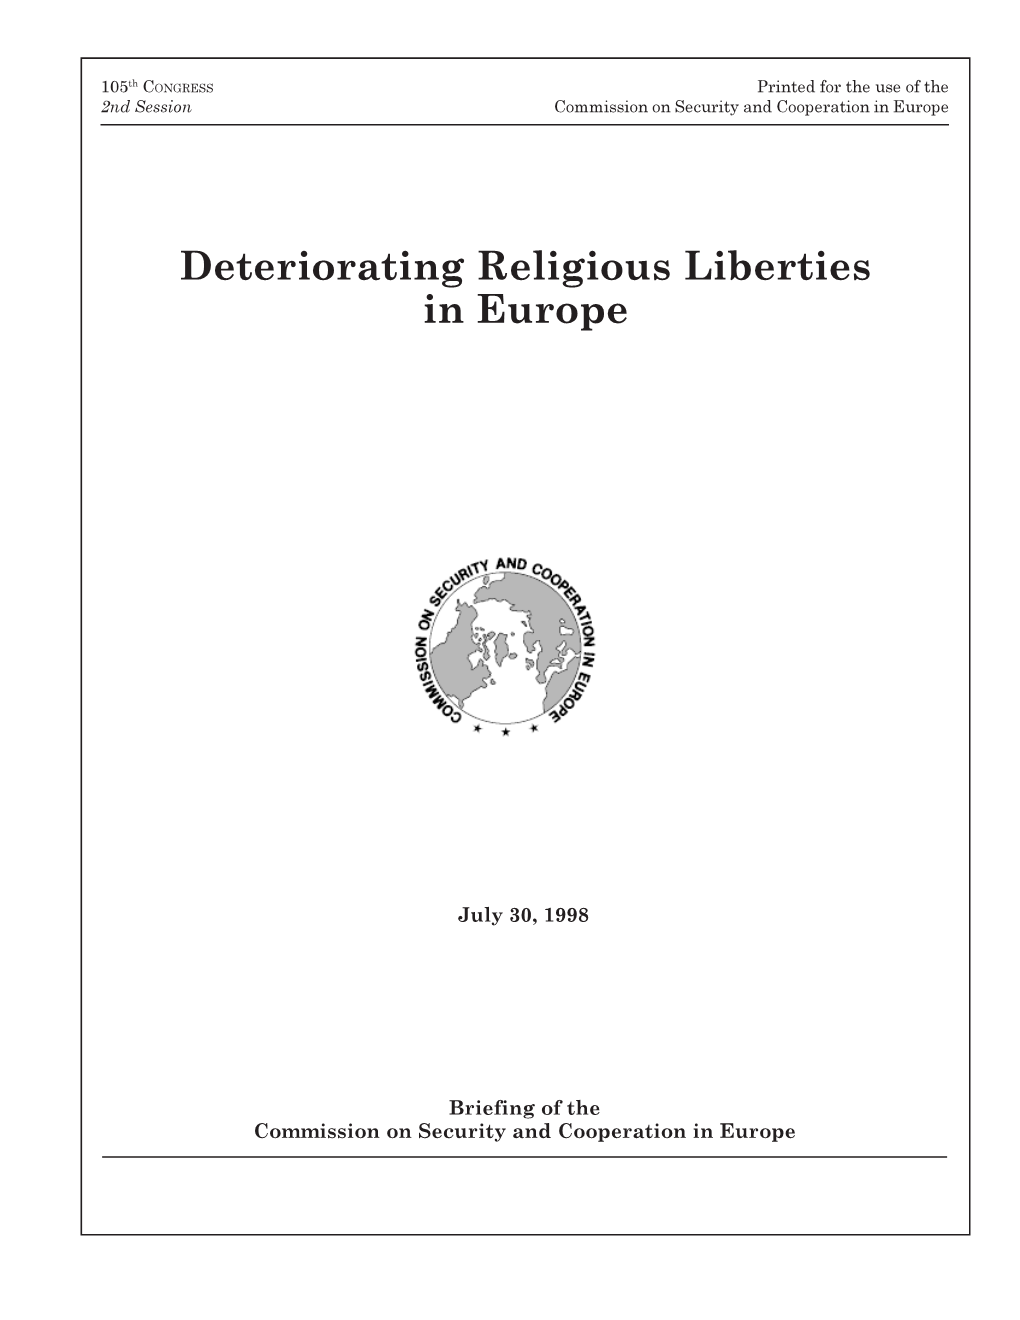 Deteriorating Religious Liberties in Europe